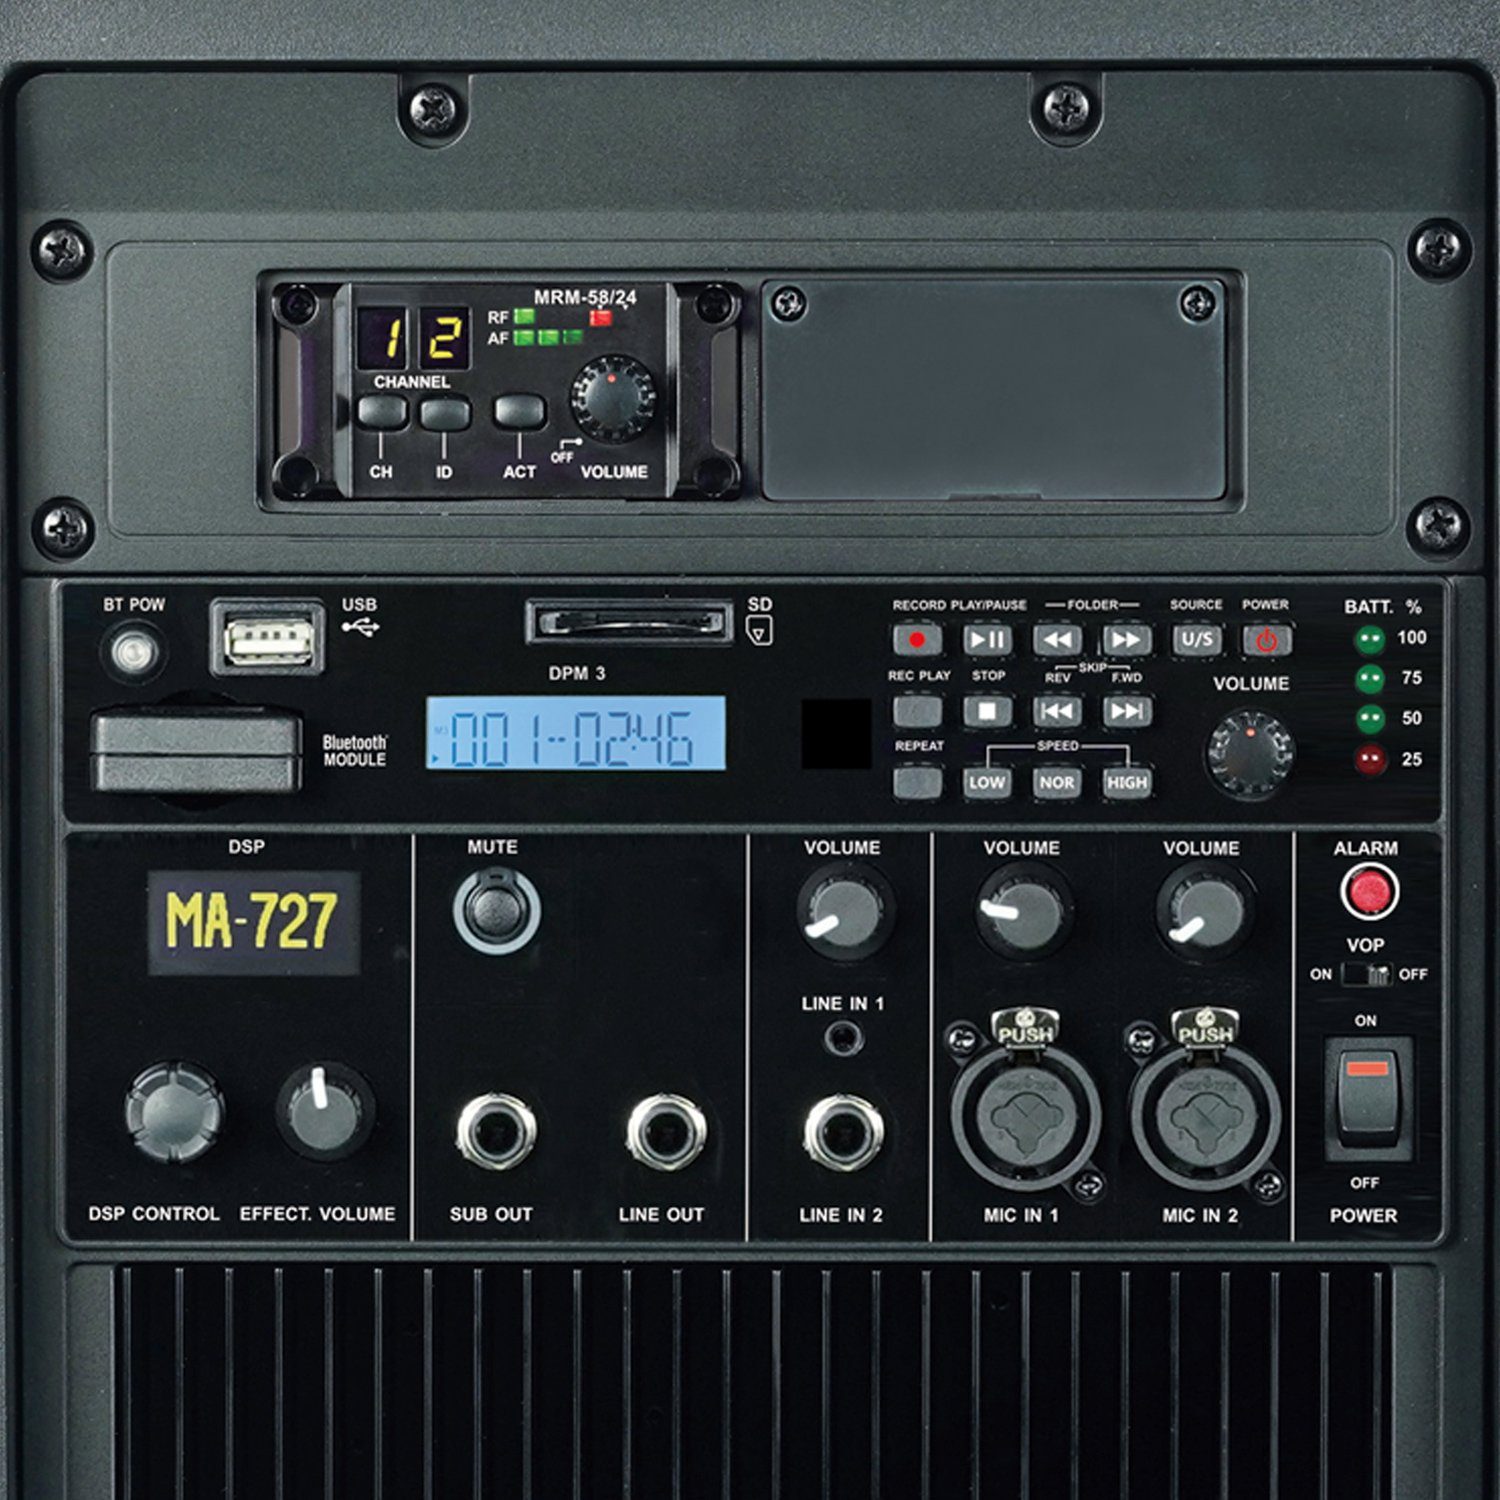 170 (Bluetooth, mit Lautsprechersystem Audio Mipro MA-727 Lautsprecher Empfangsmodul W) 1-Kanal